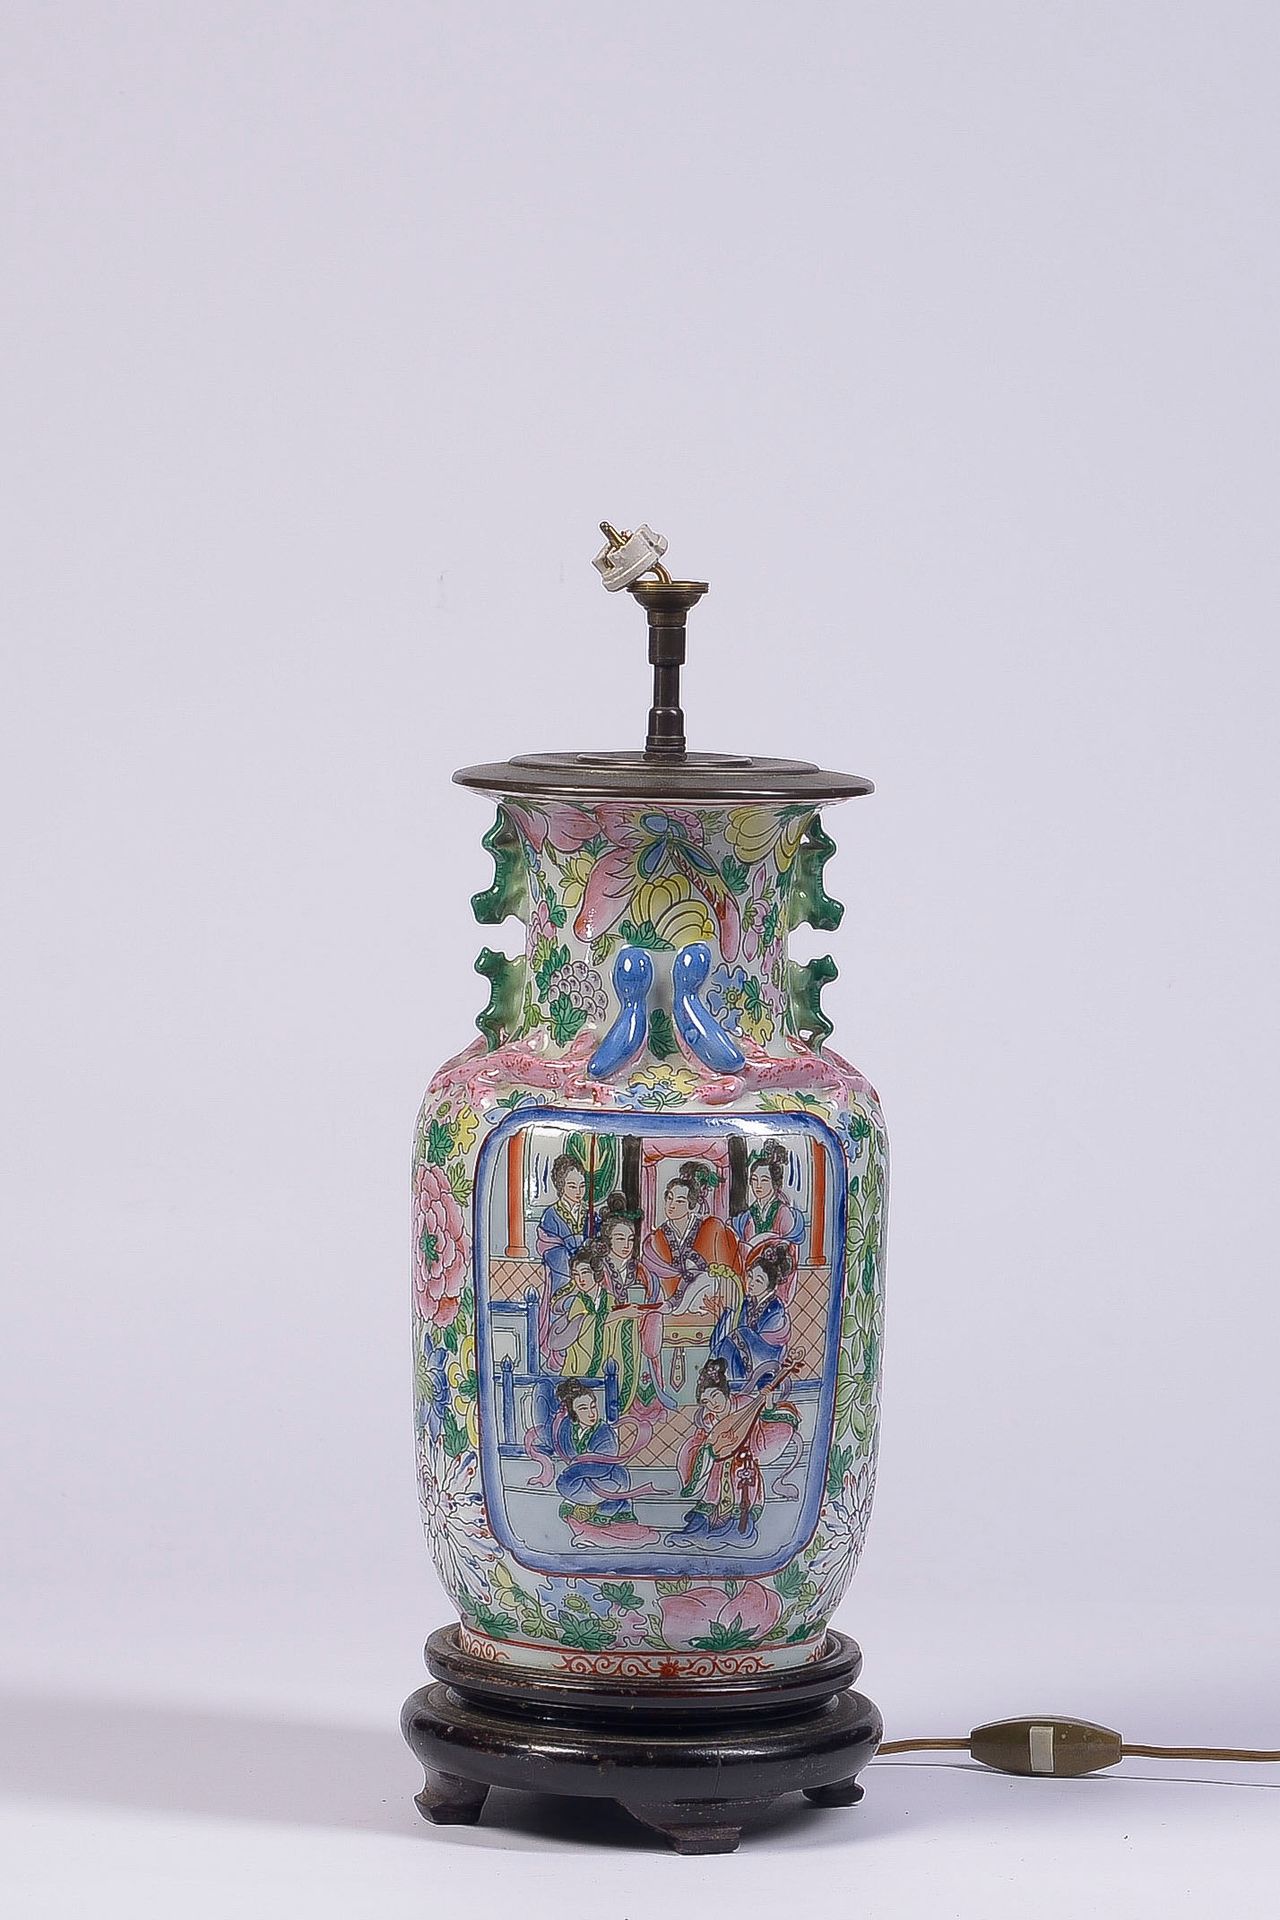 Null 中国，广州

饰有宫廷景象和花蕊的多色瓷花瓶

20世纪

(穿孔通电，安装成灯)

高度：33厘米